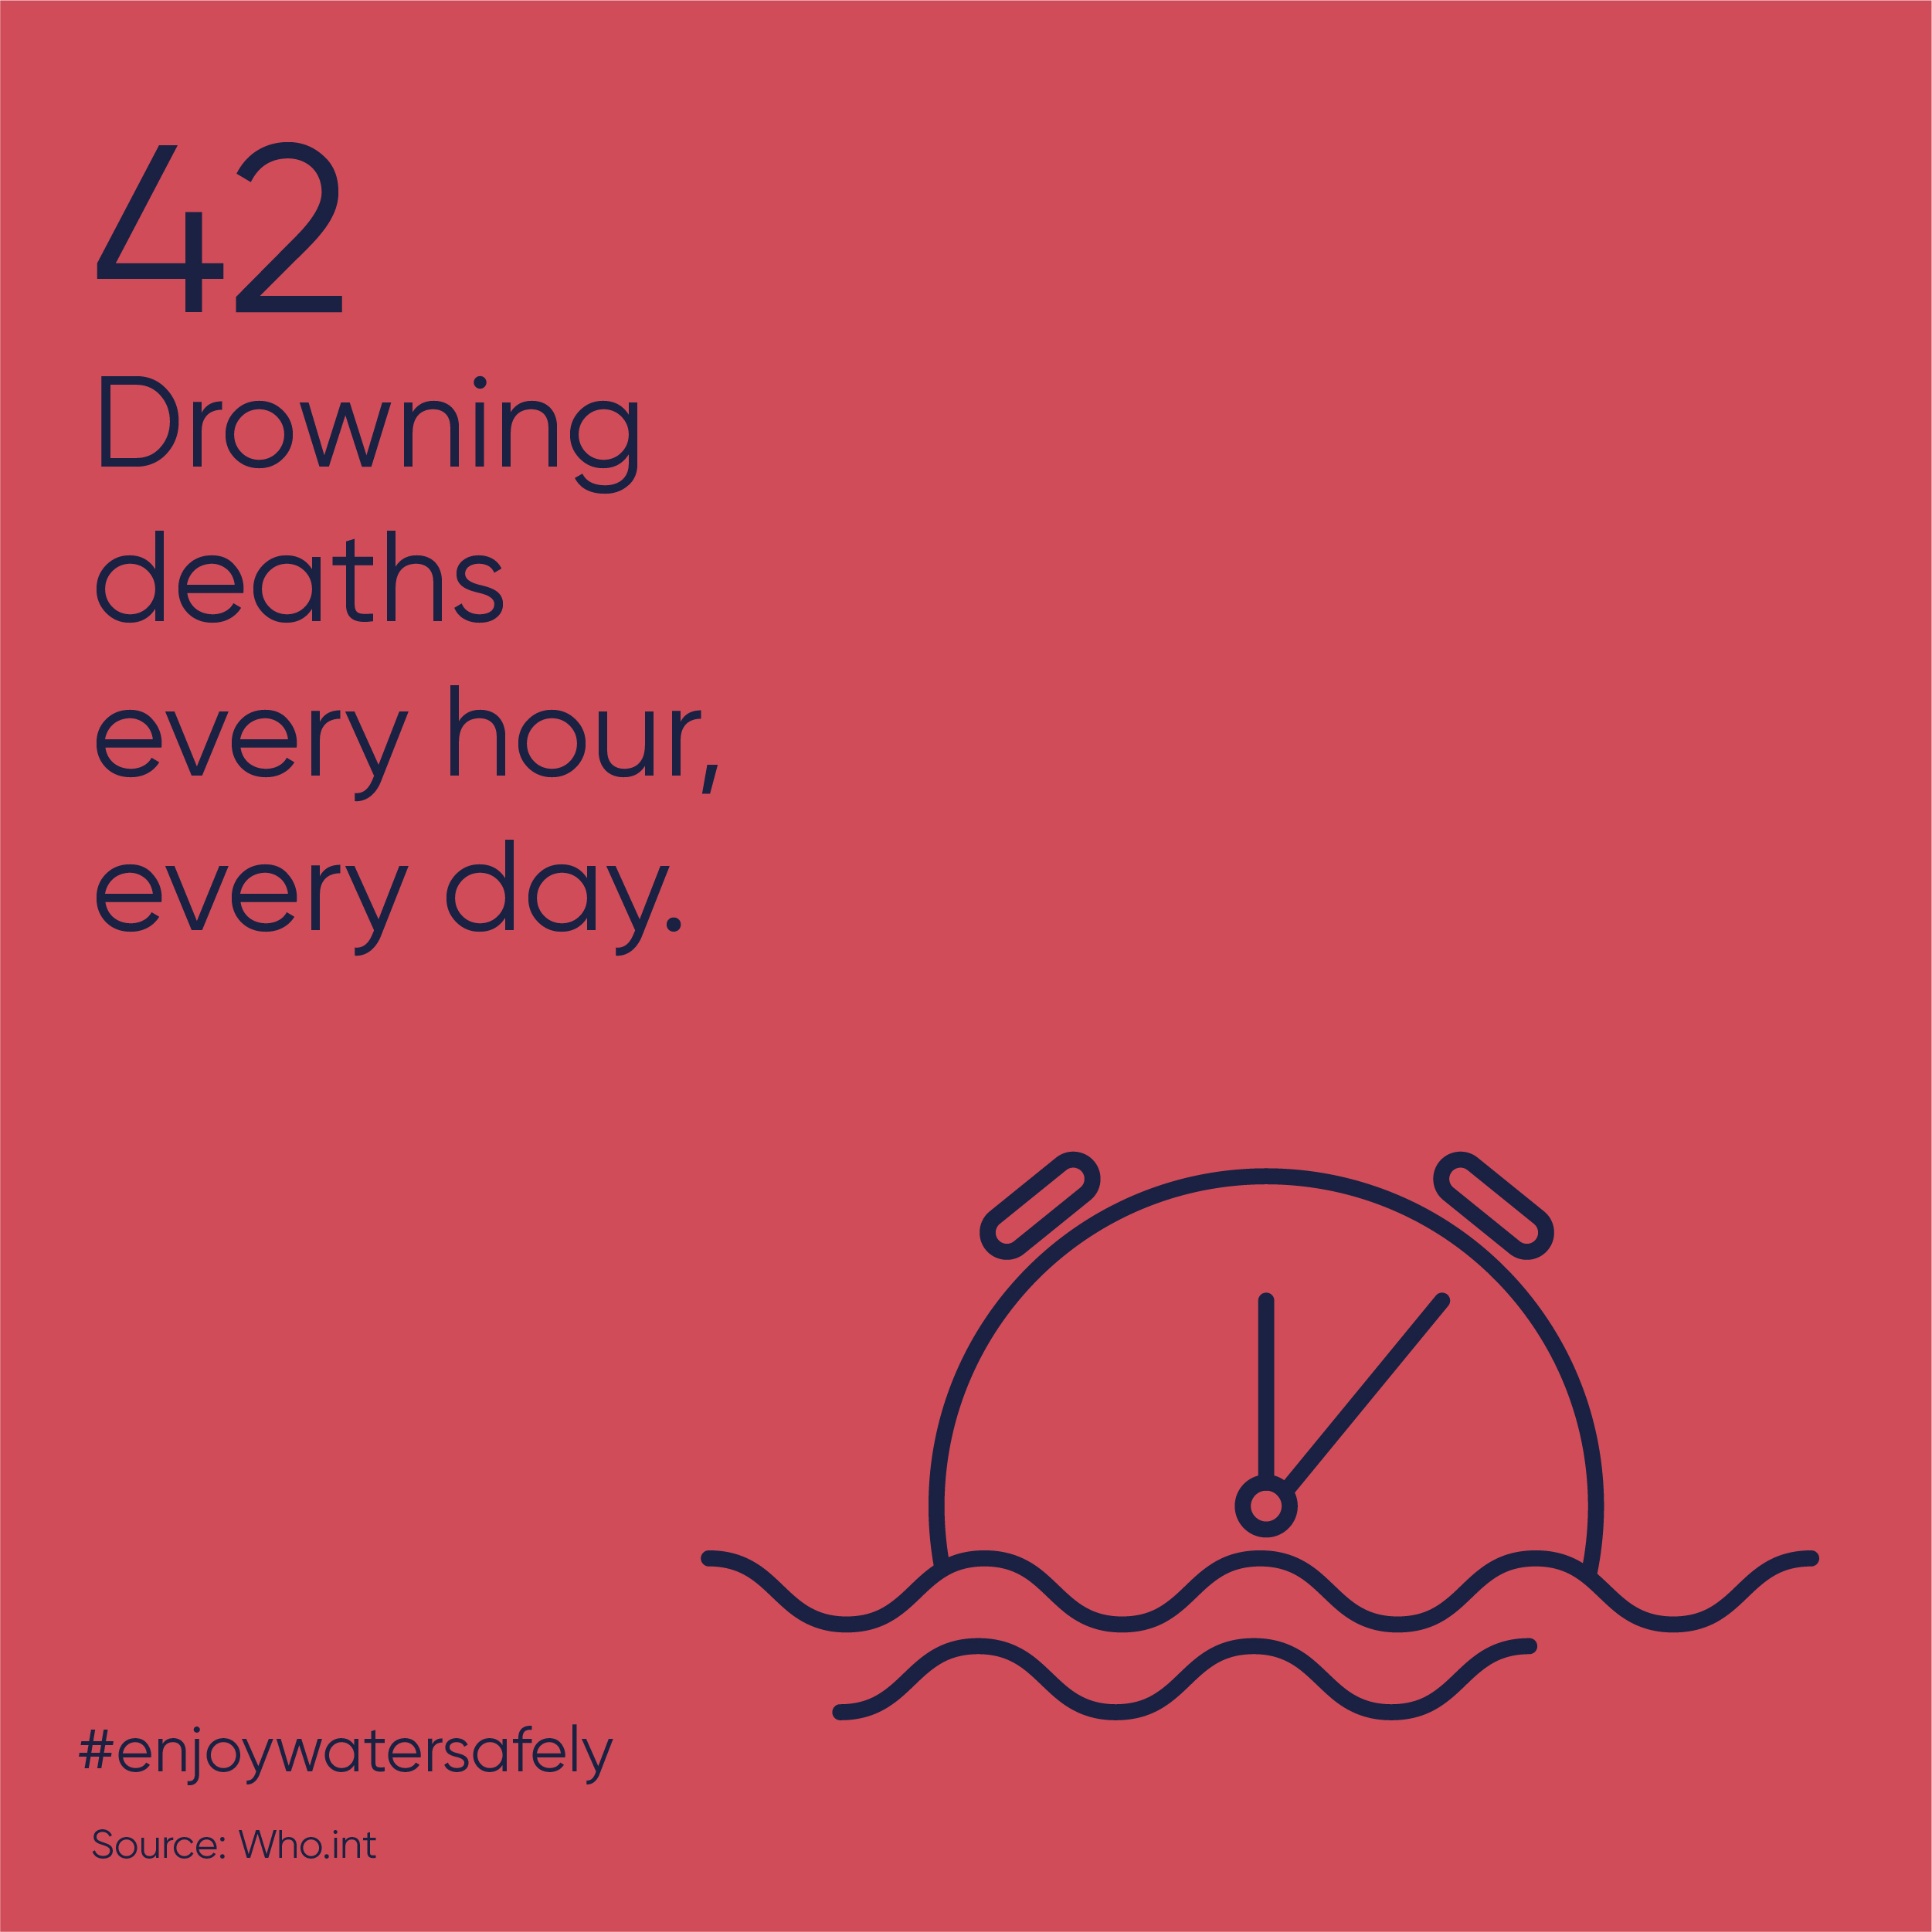 Drownings per hour Image